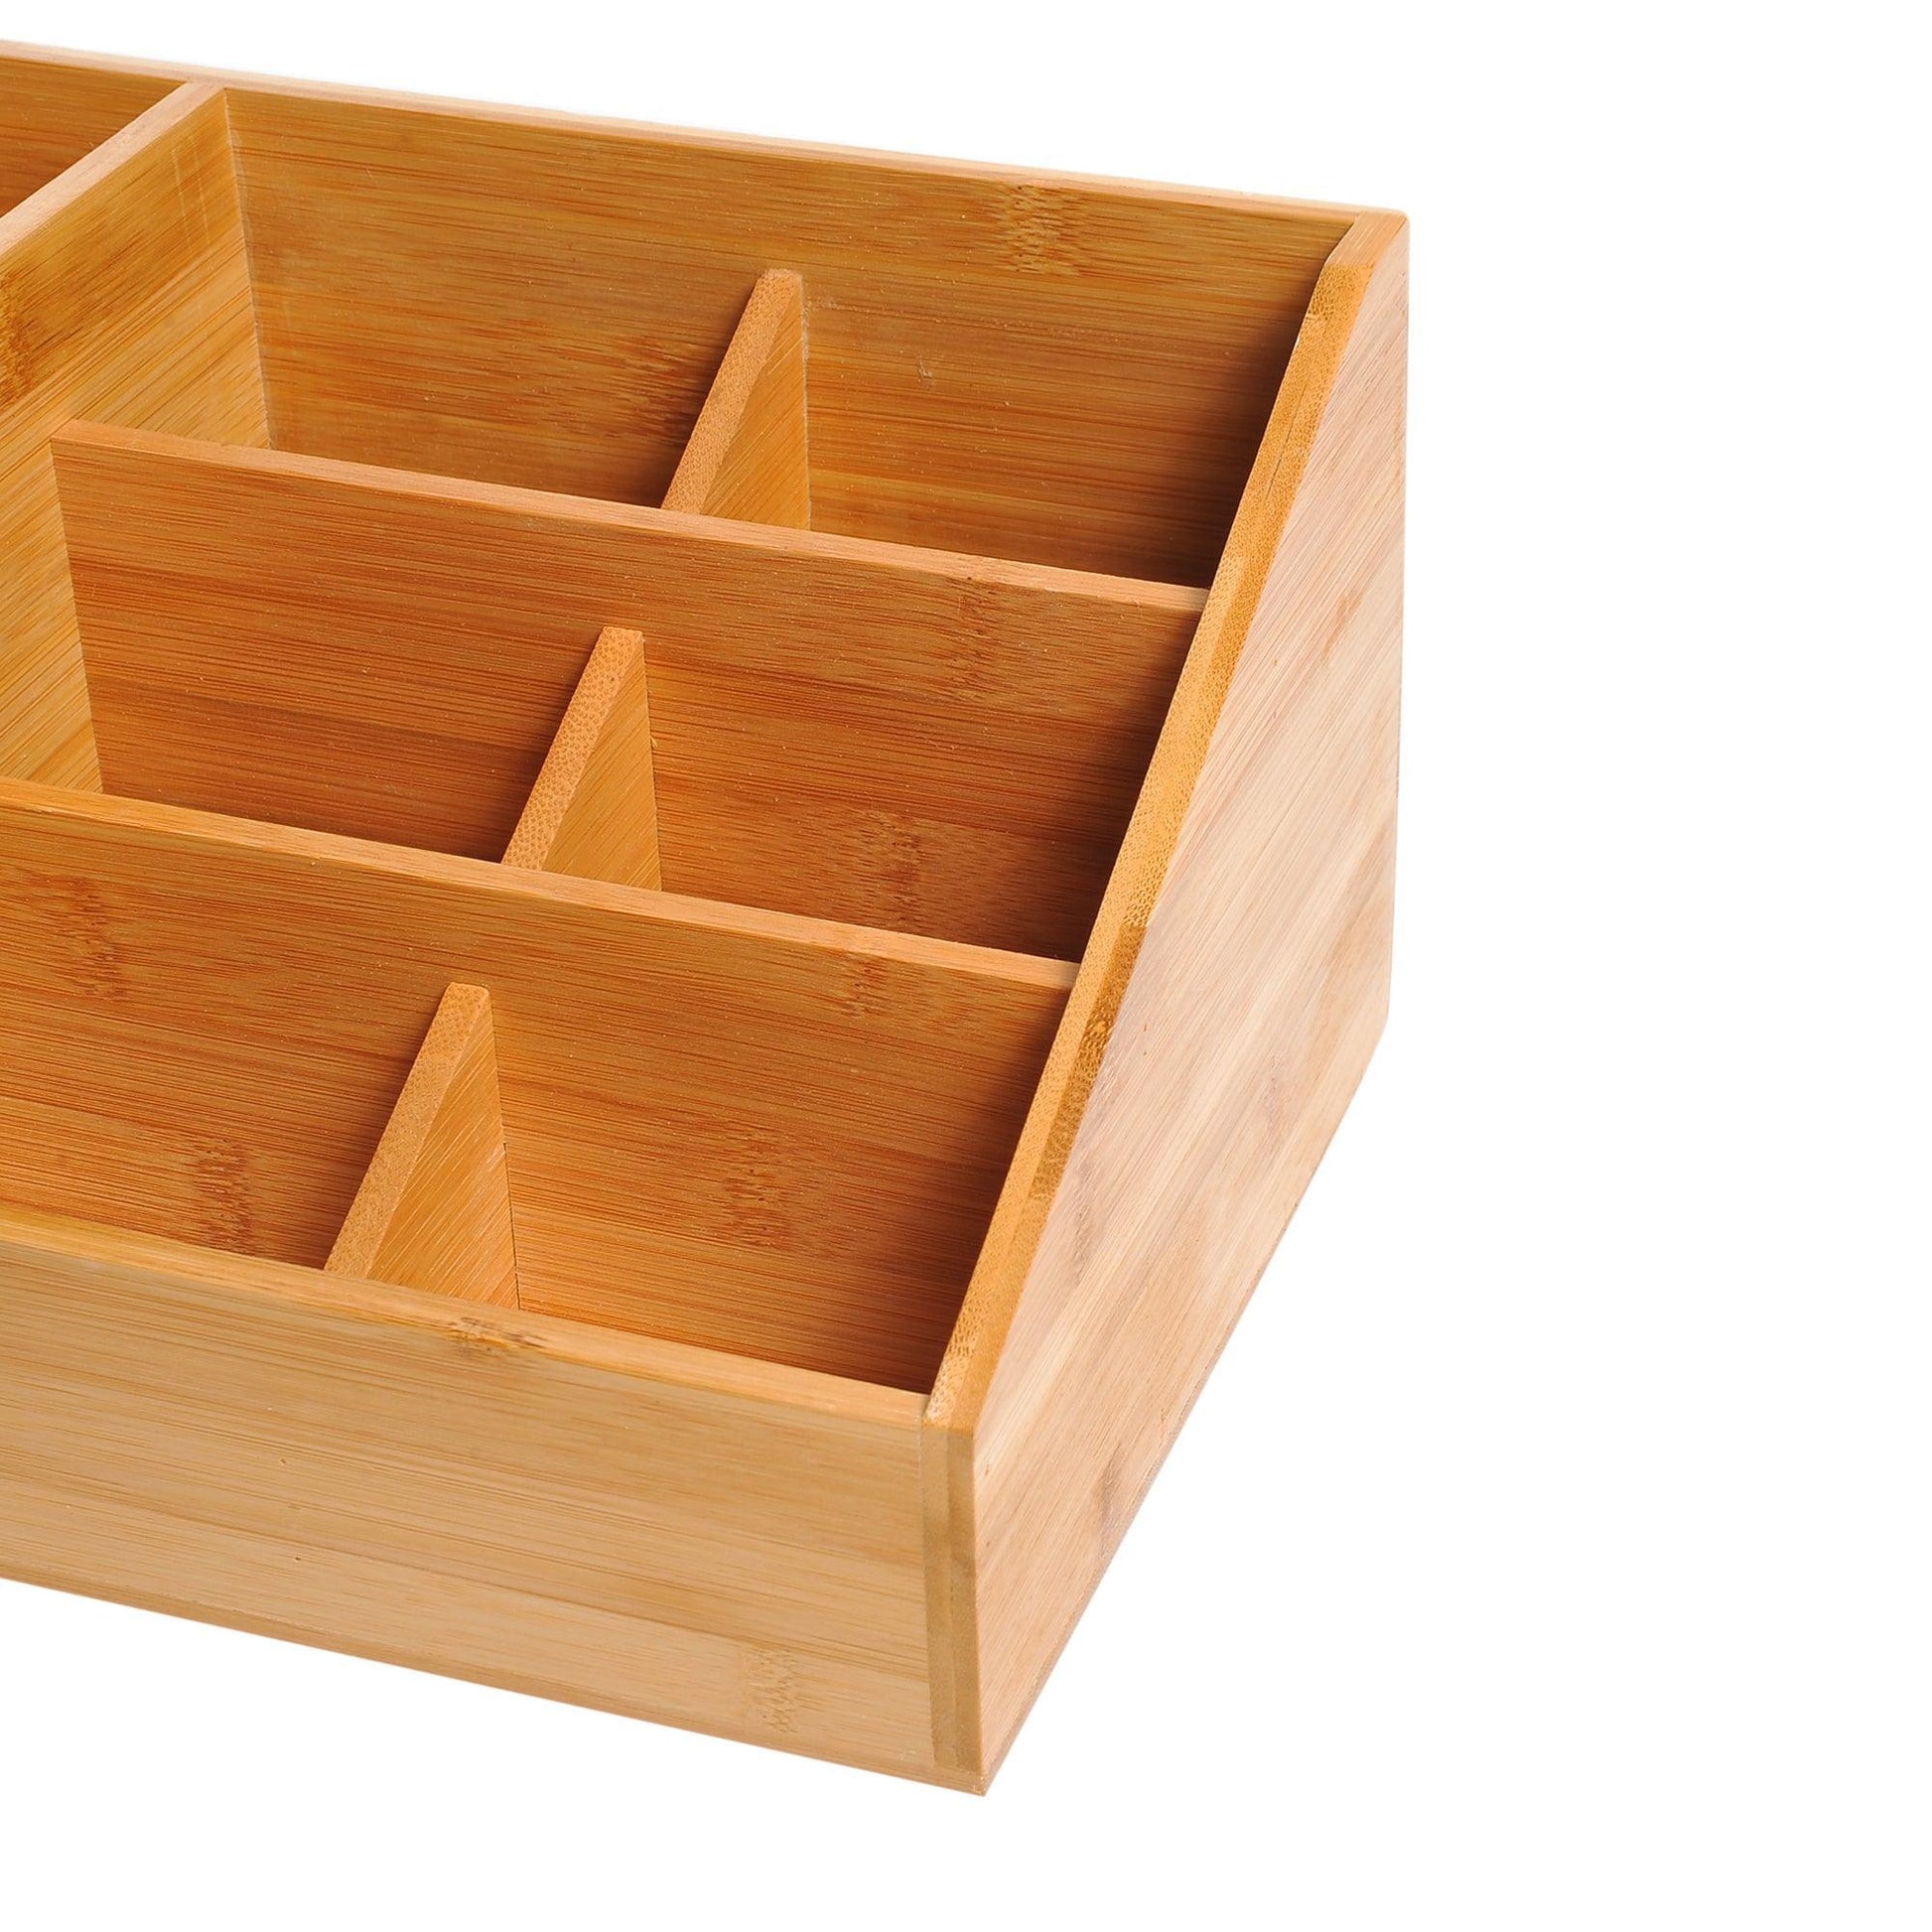 HOMCOM Wooden Desk Organiser with 7 Compartments & 2 Drawers - ALL4U RETAILER LTD